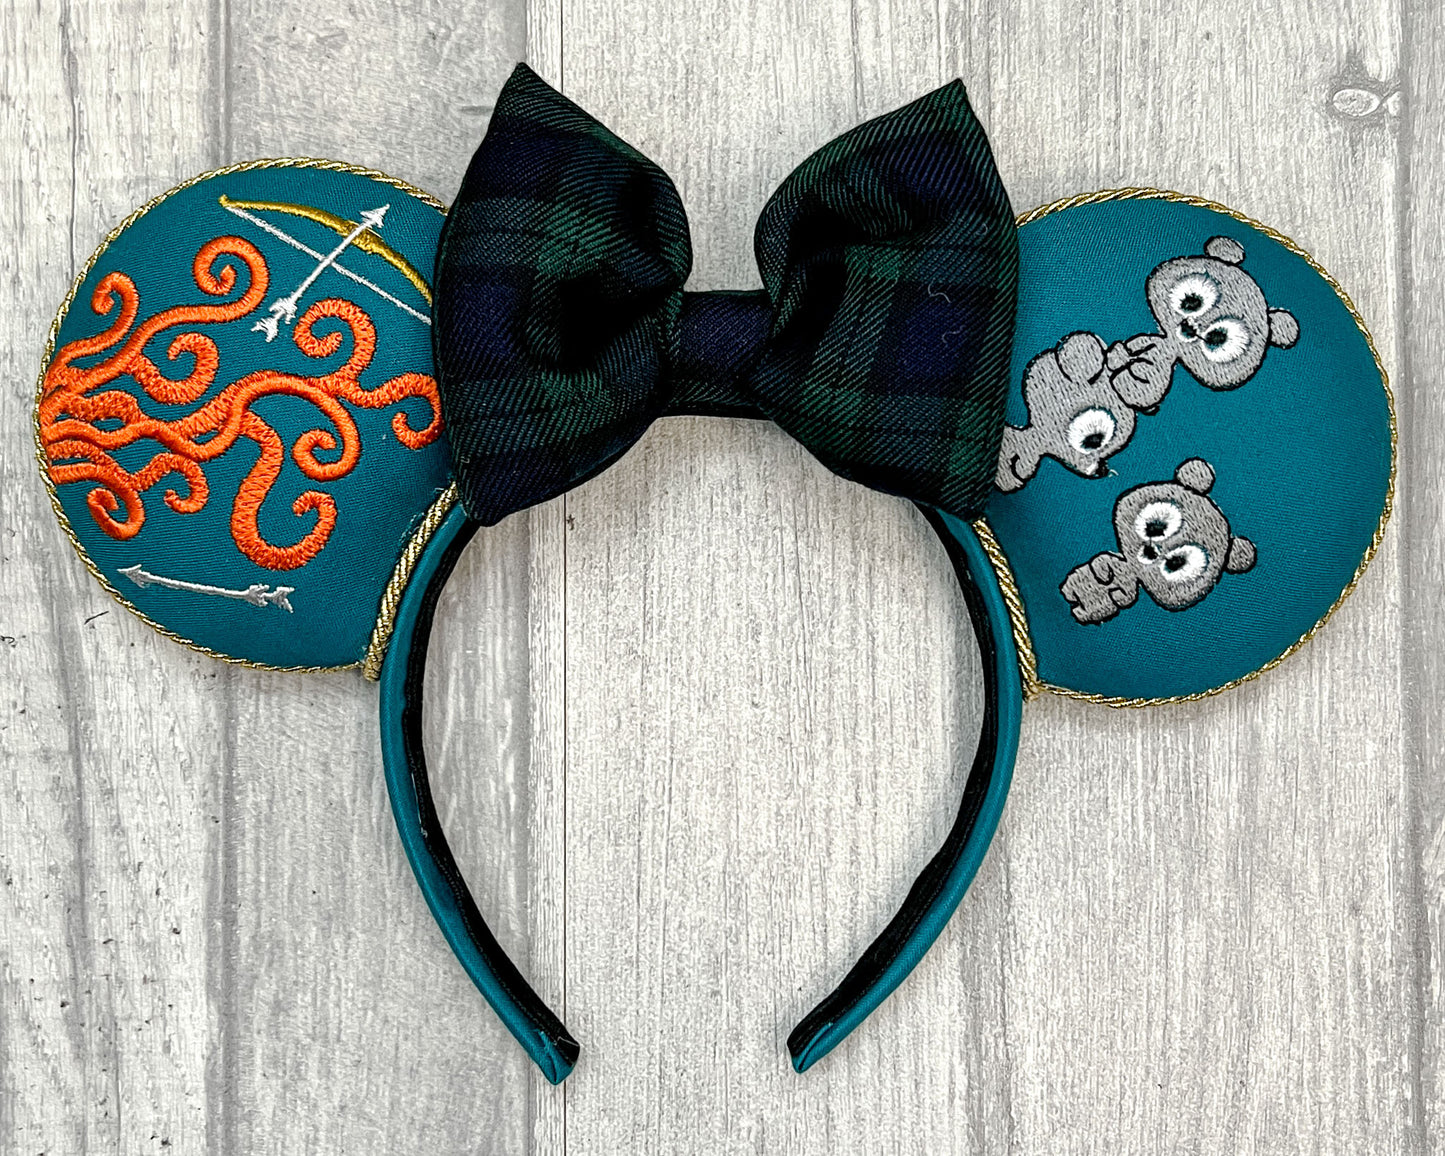 Scottish Princess Merida Inspired Minnie Mouse Ears